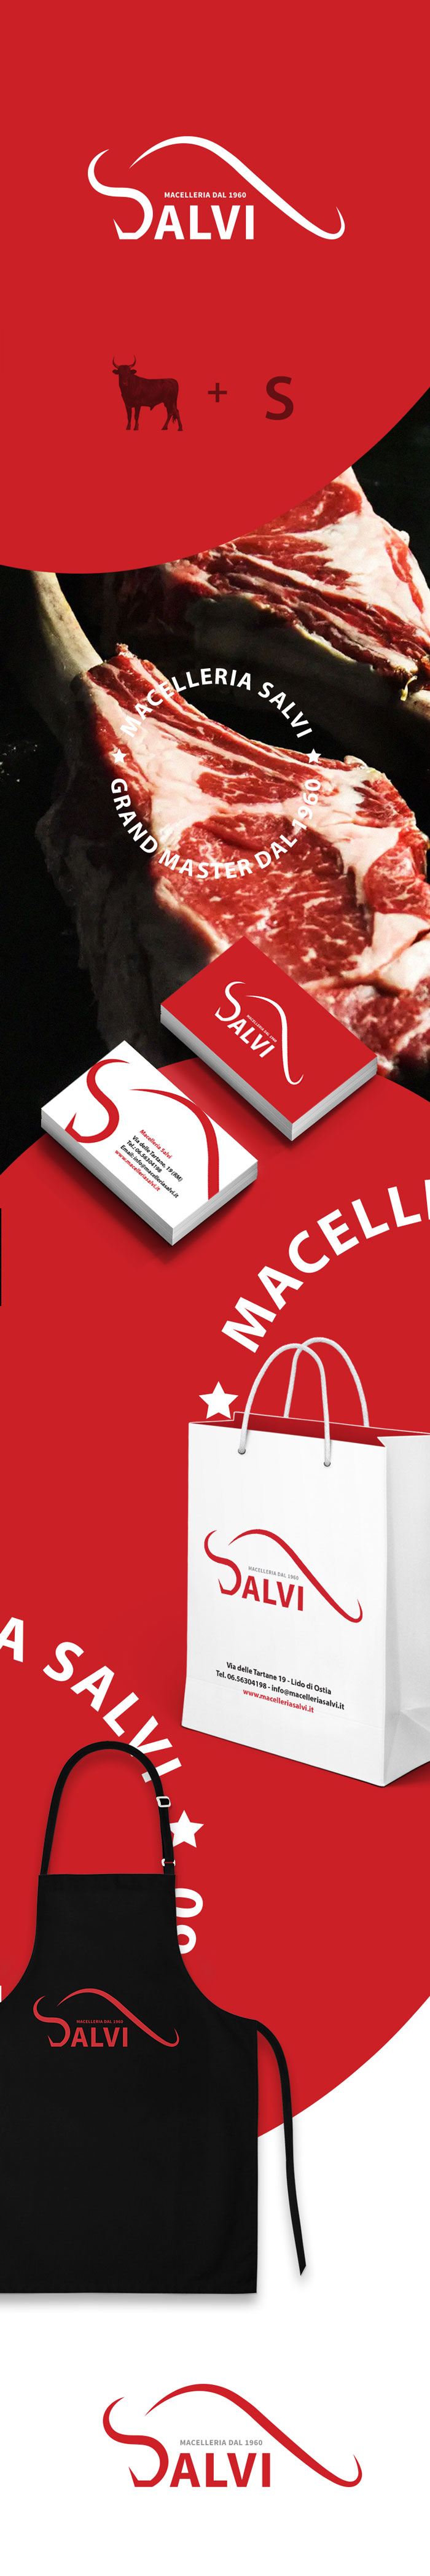 Portfolio iblend agency logo brand identity Macelleria Salvi